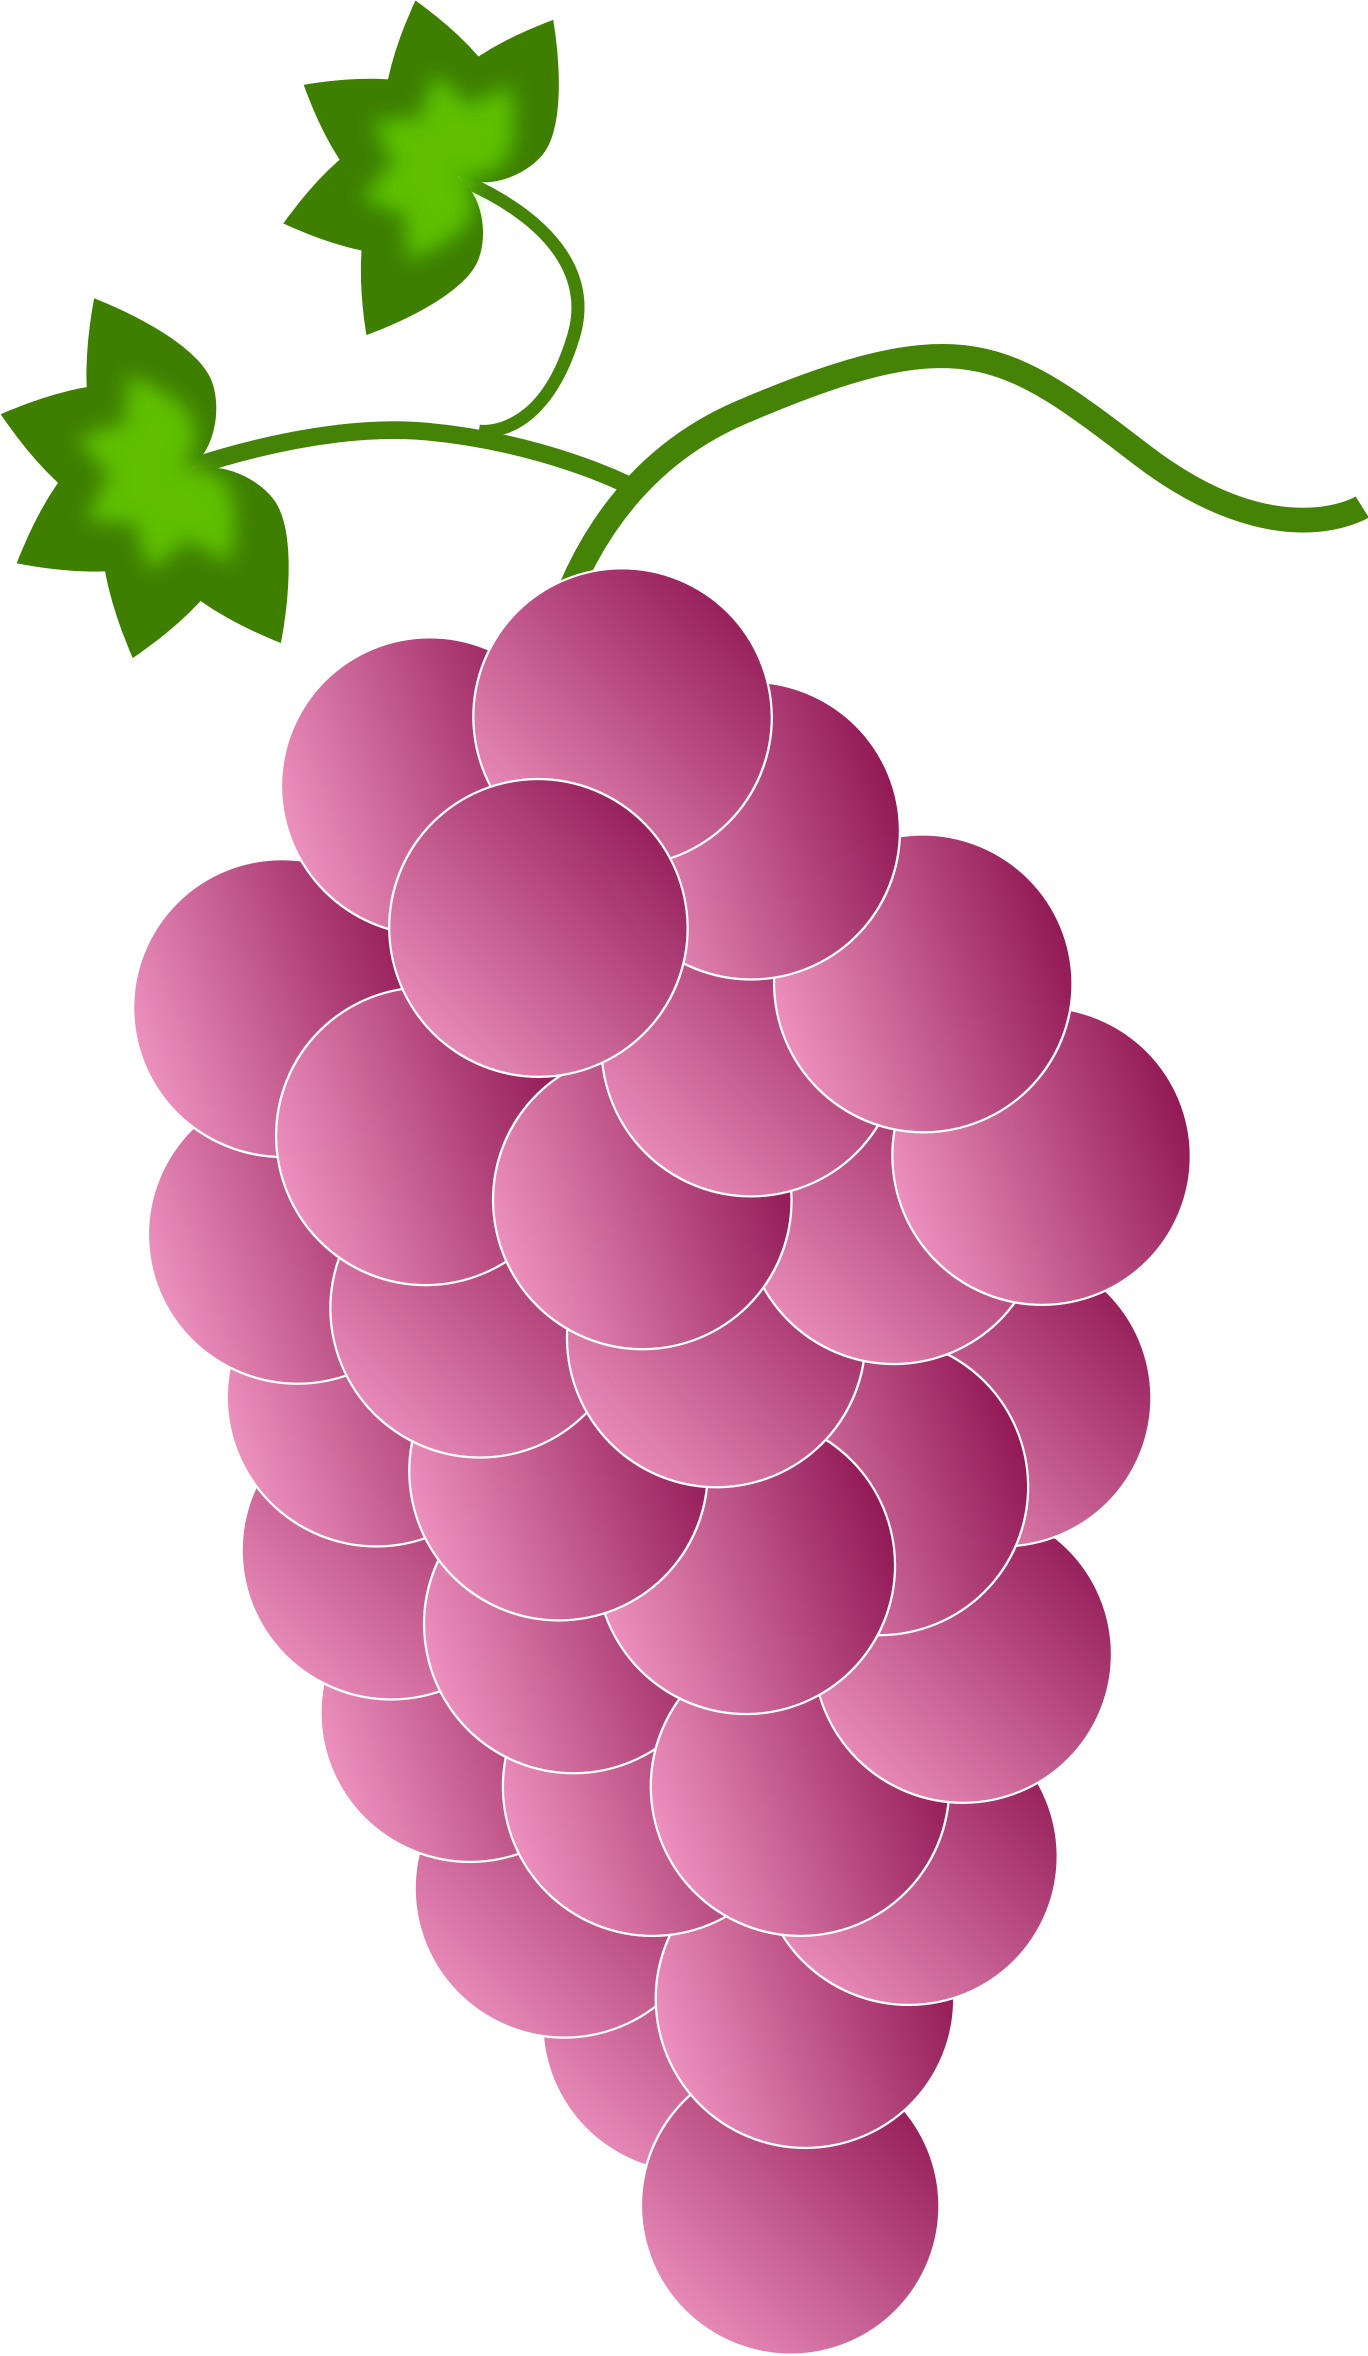 Grape clipart greaps. Pink grapes big image